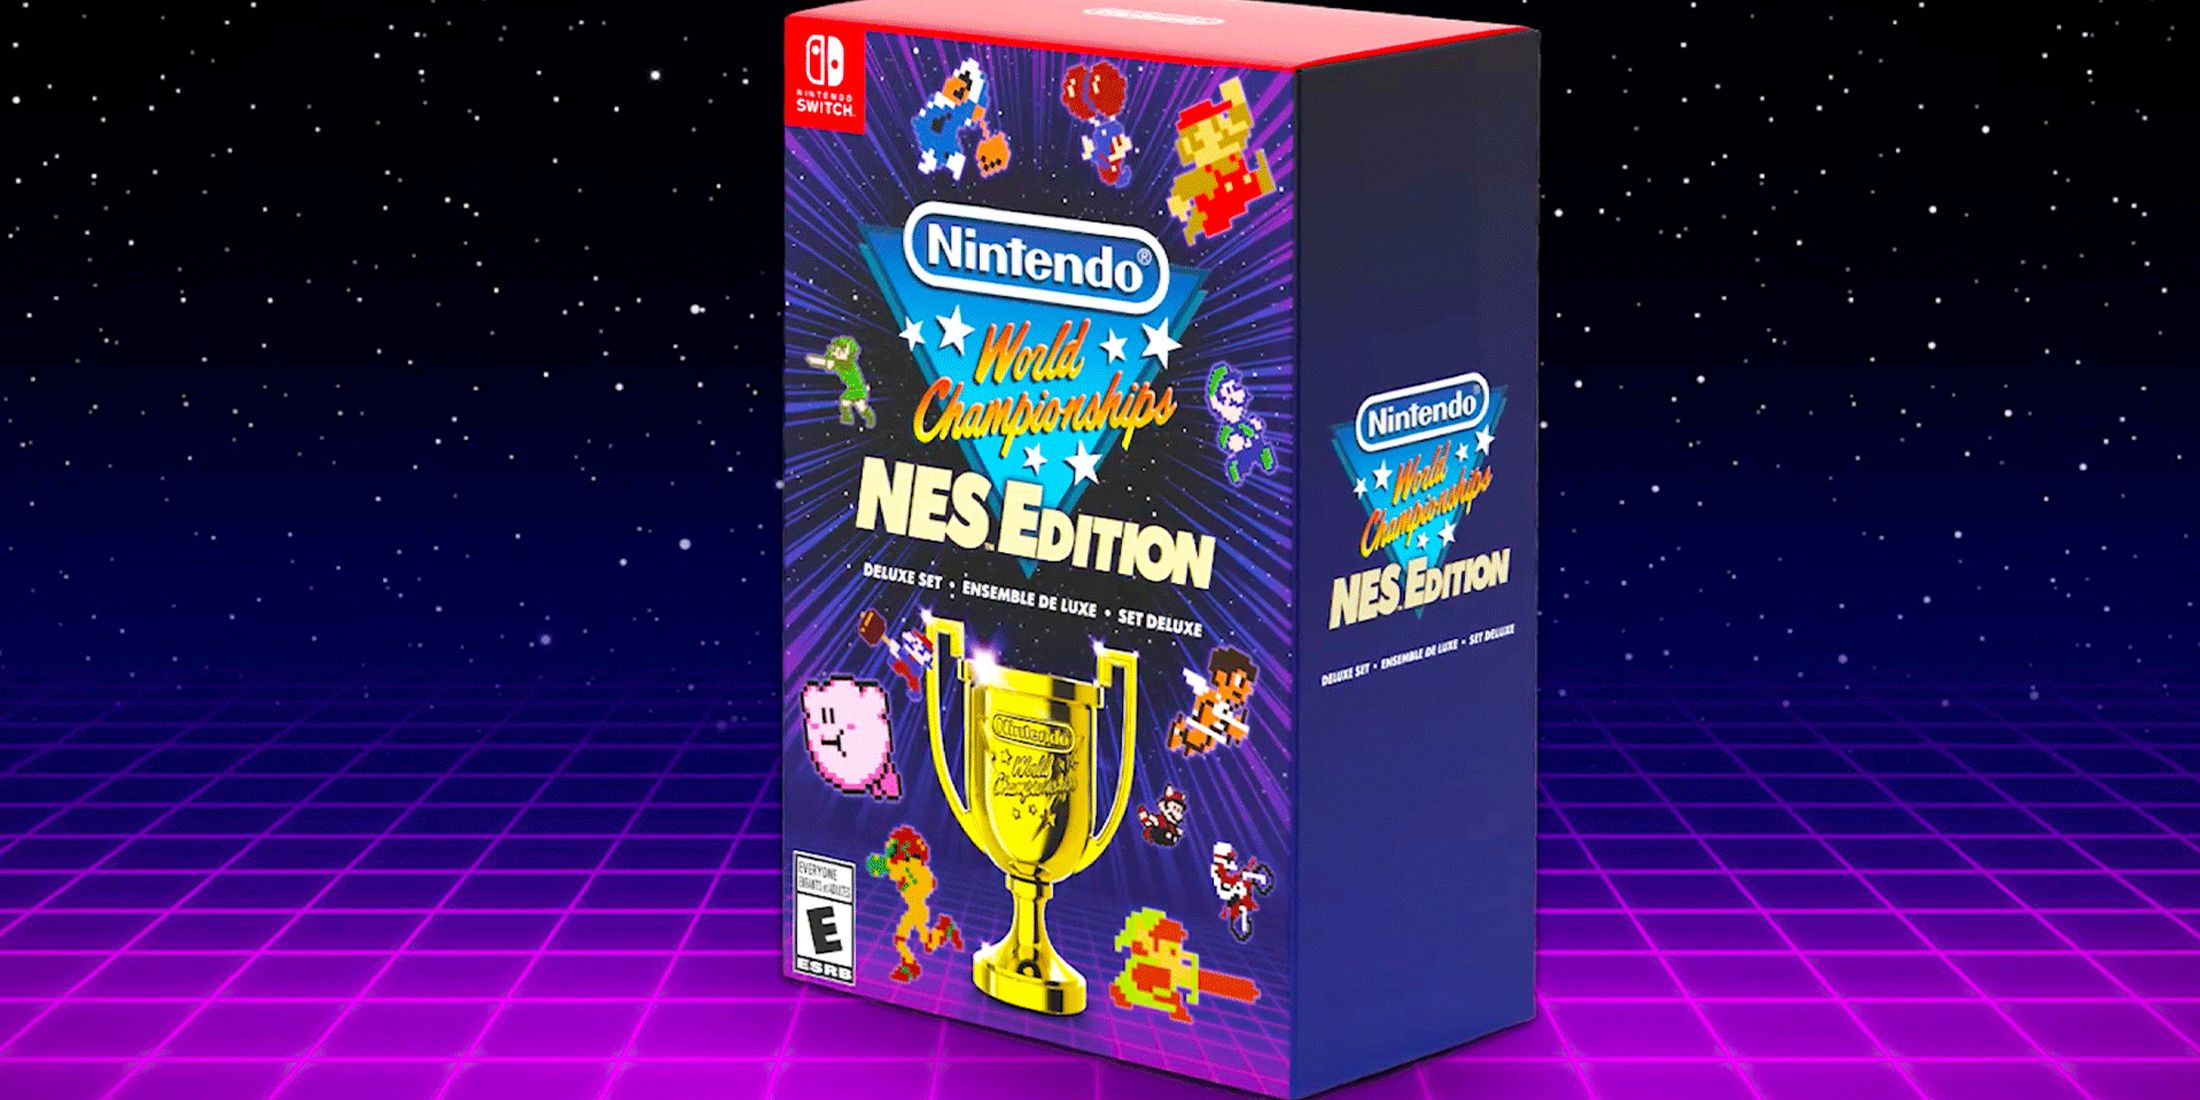 Nintendo World Championships NES Edition Developer